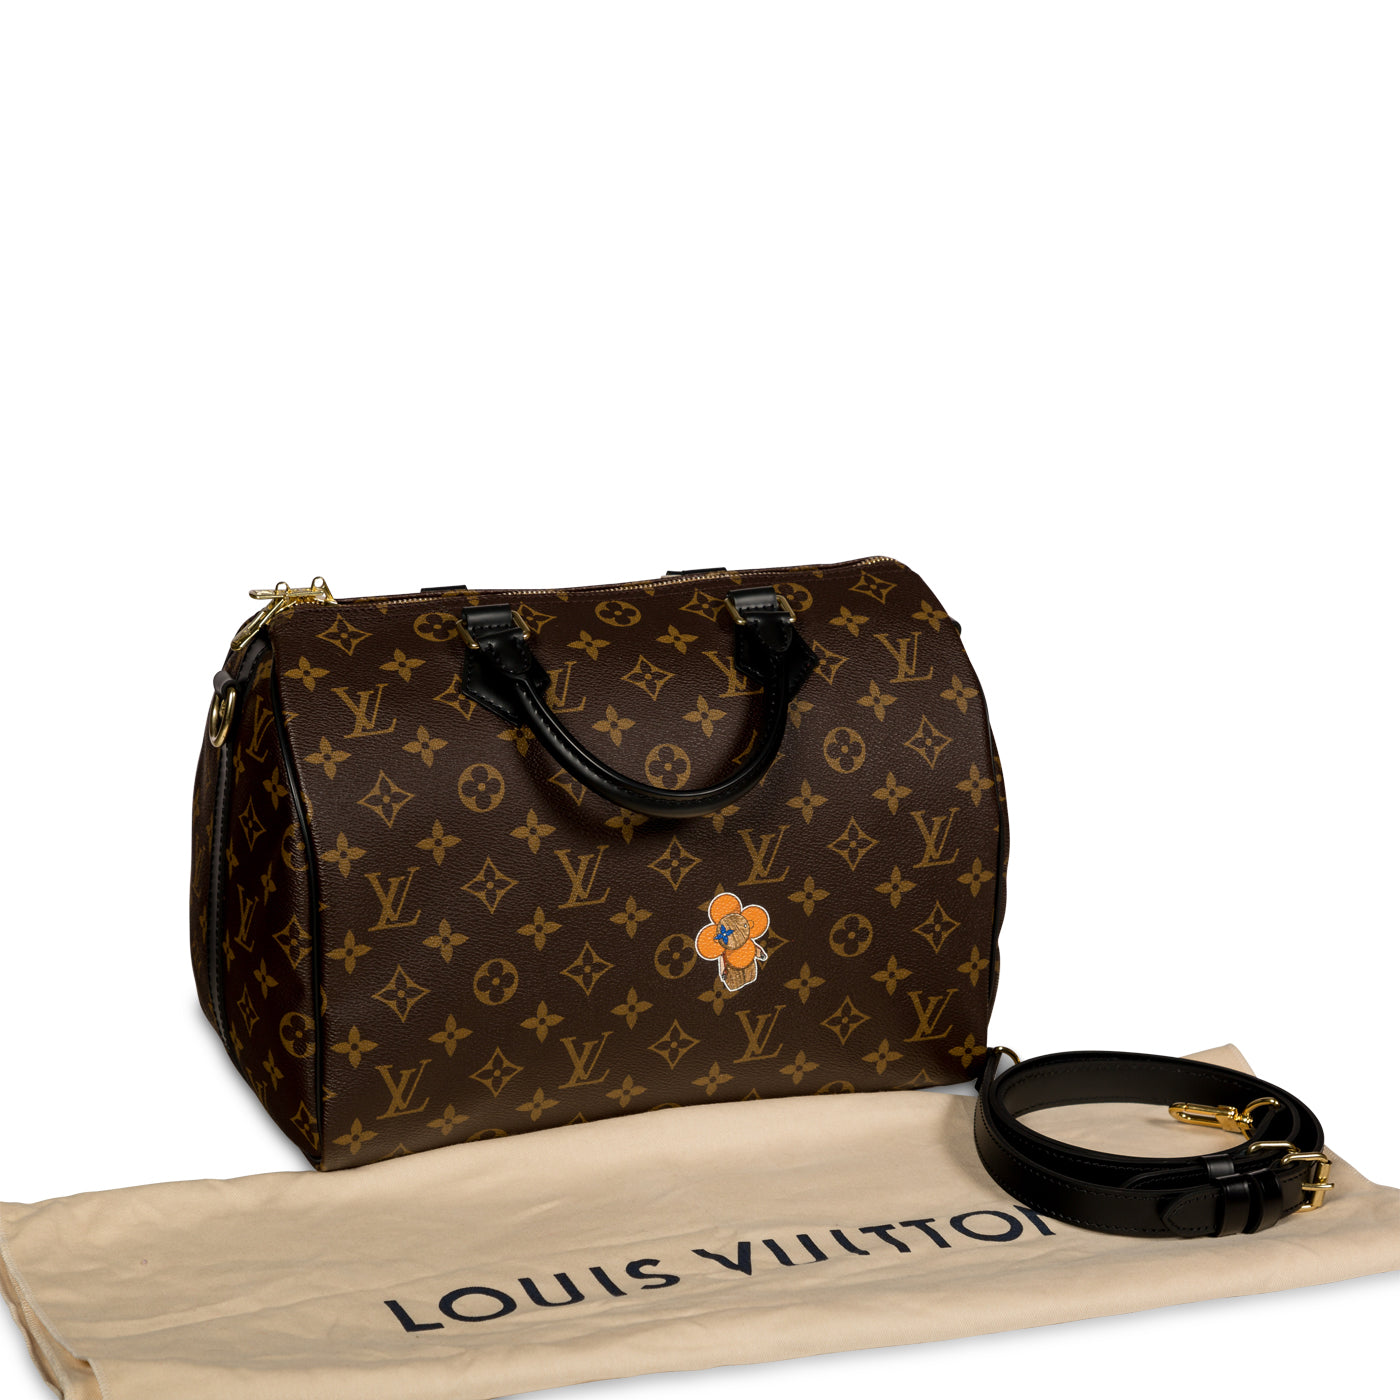 Louis Vuitton, My World Tour Speedy